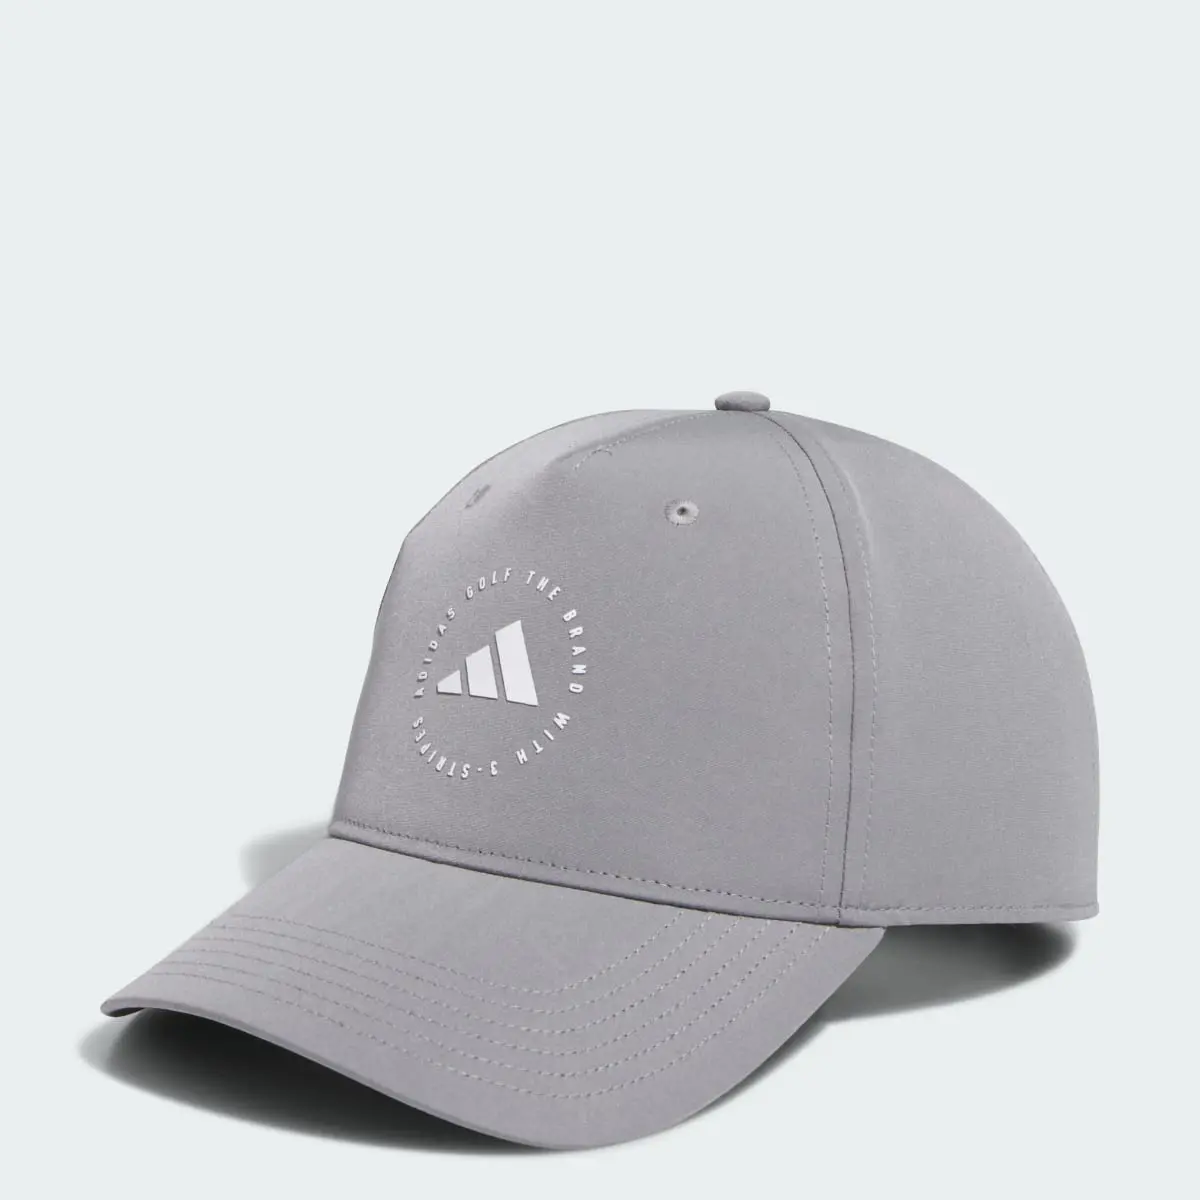 Adidas Golf Performance Hat. 1